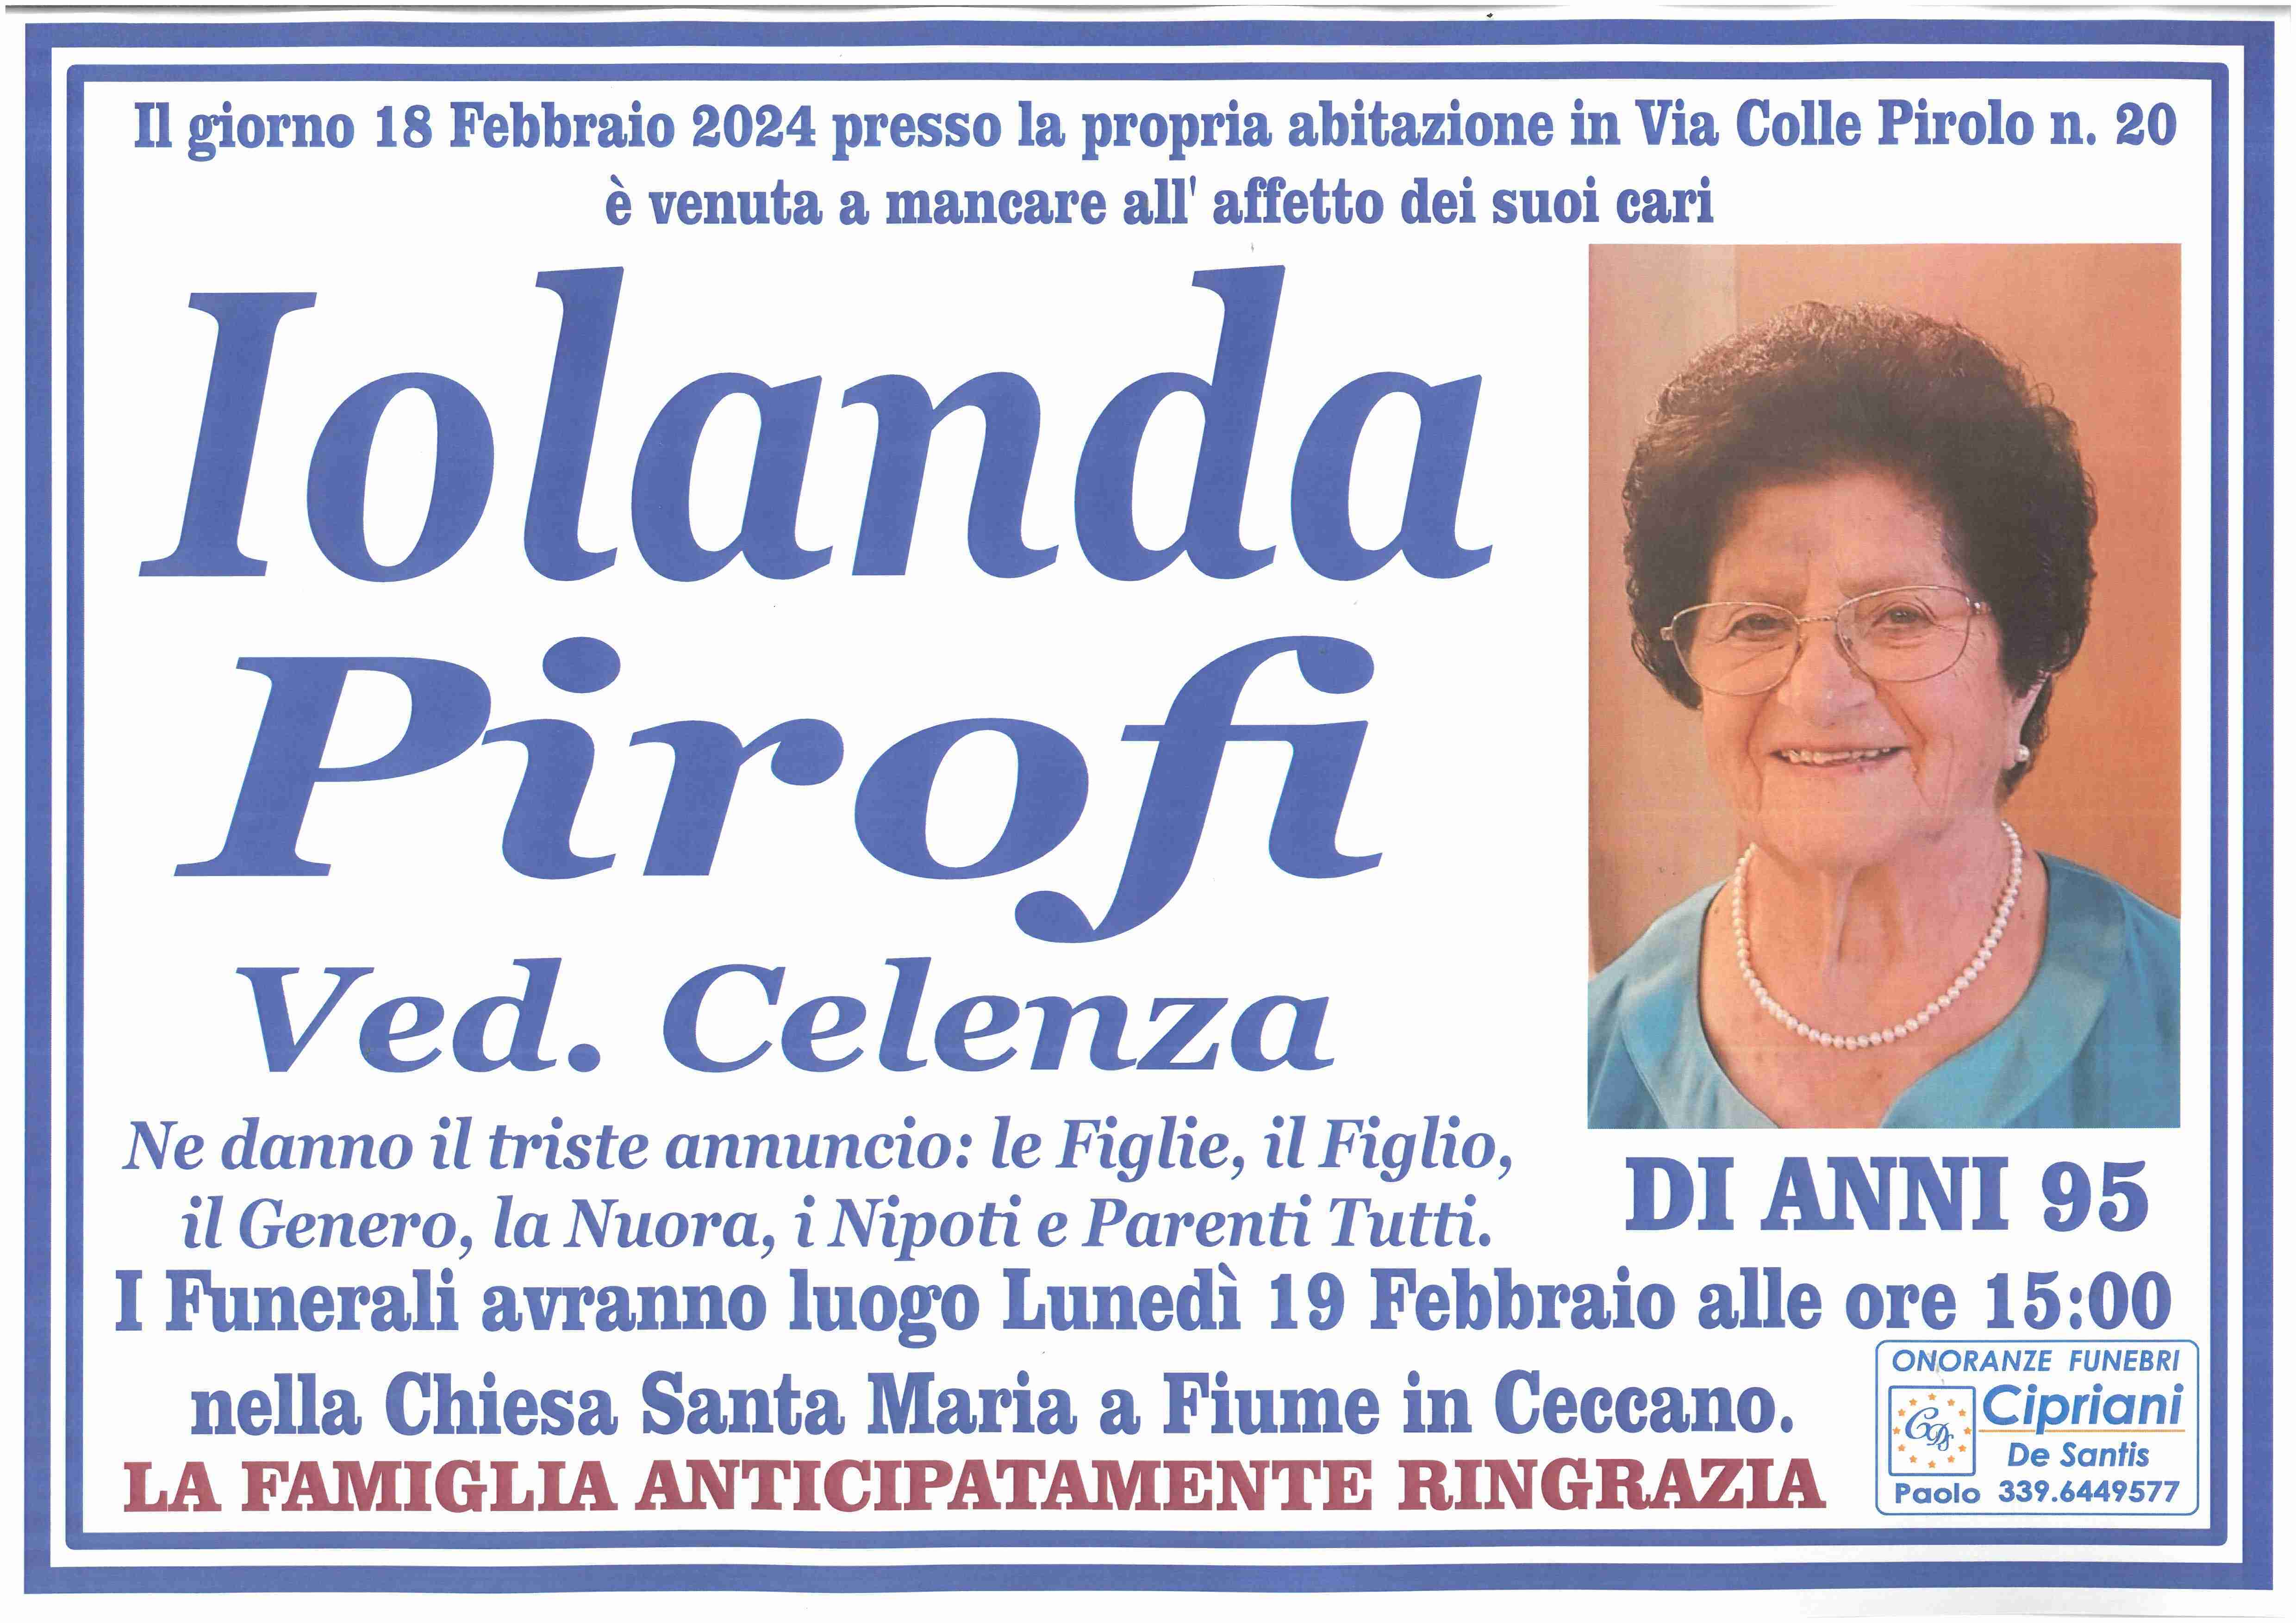 Iolanda Pirofi